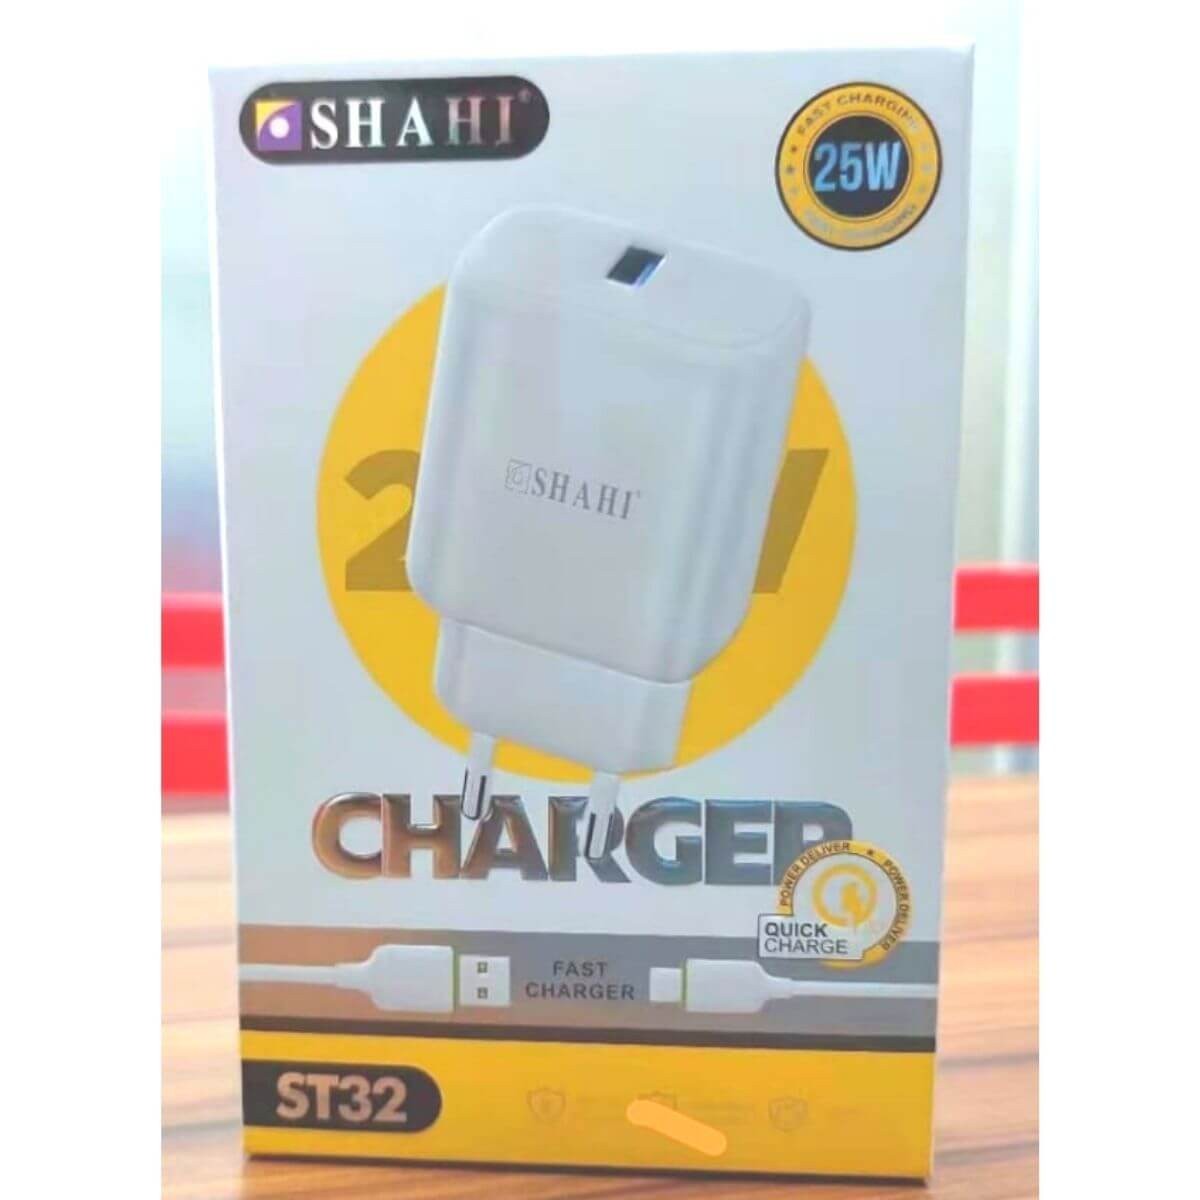 Shahi 25Watt ST32 Iphone Fast Quick Charger BD